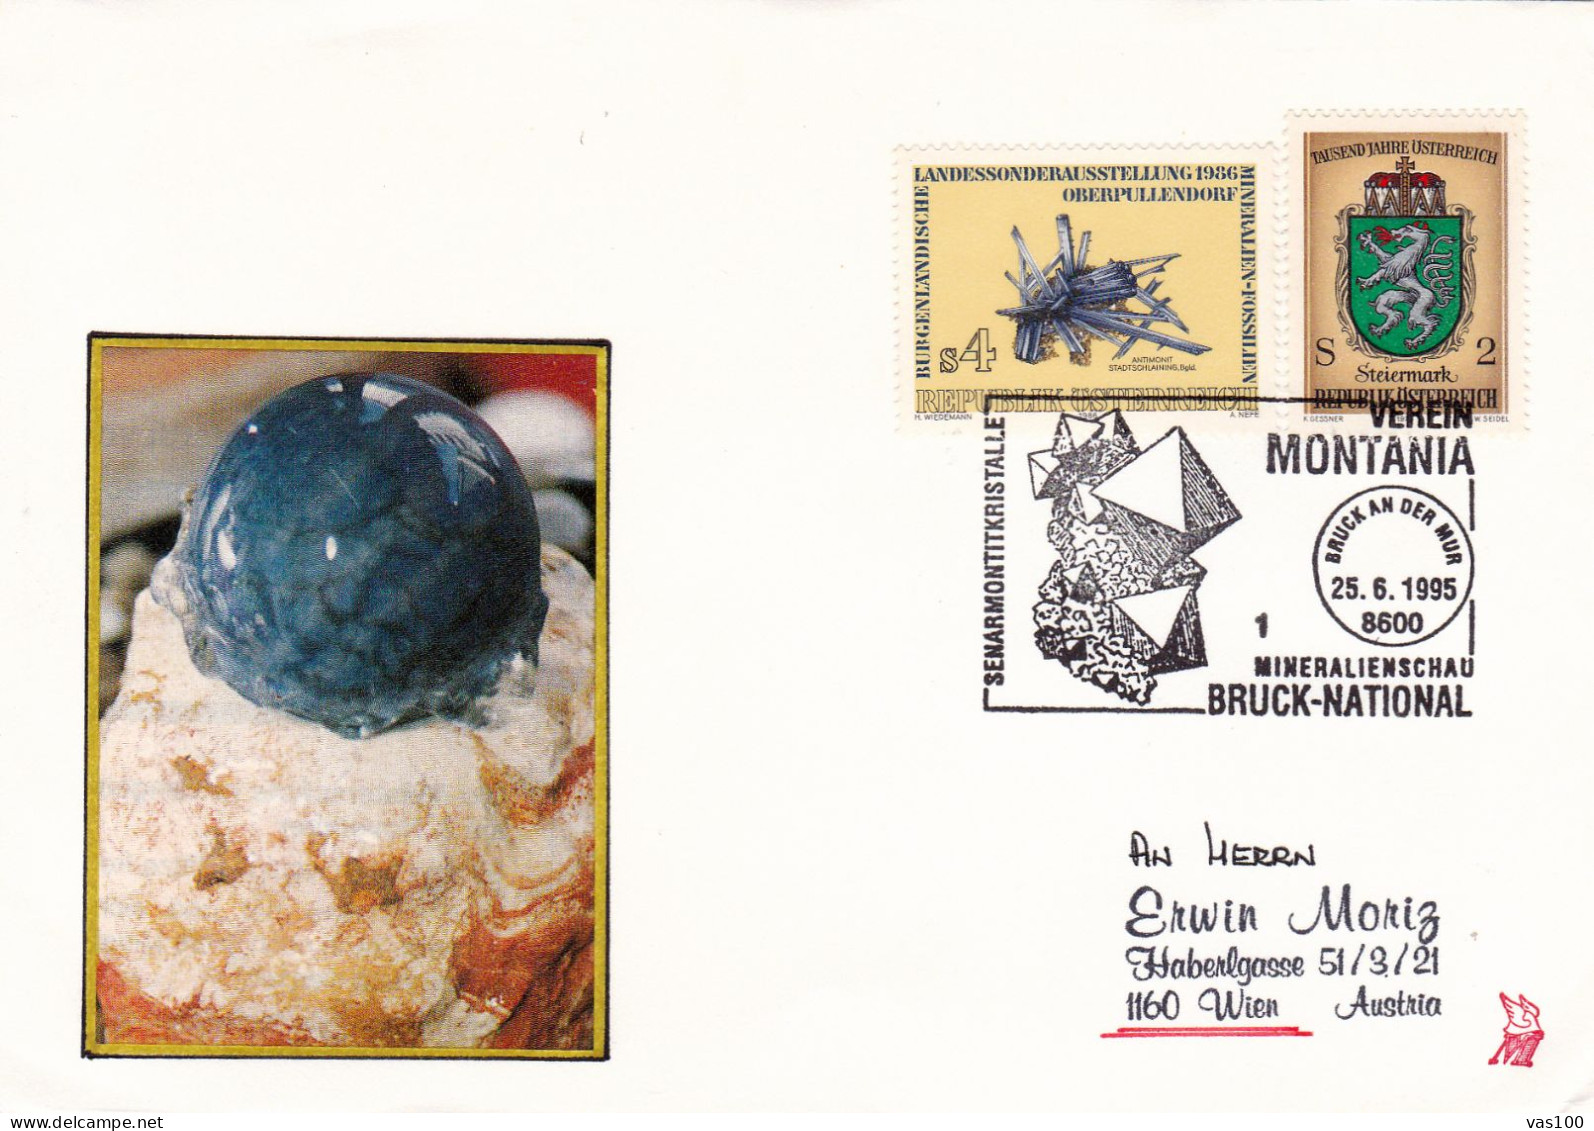 AUSTRIA POSTAL HISTORY / MINERALIENSCHAU BRUCK-NATIONAL, 25.06.1995 - Minerales